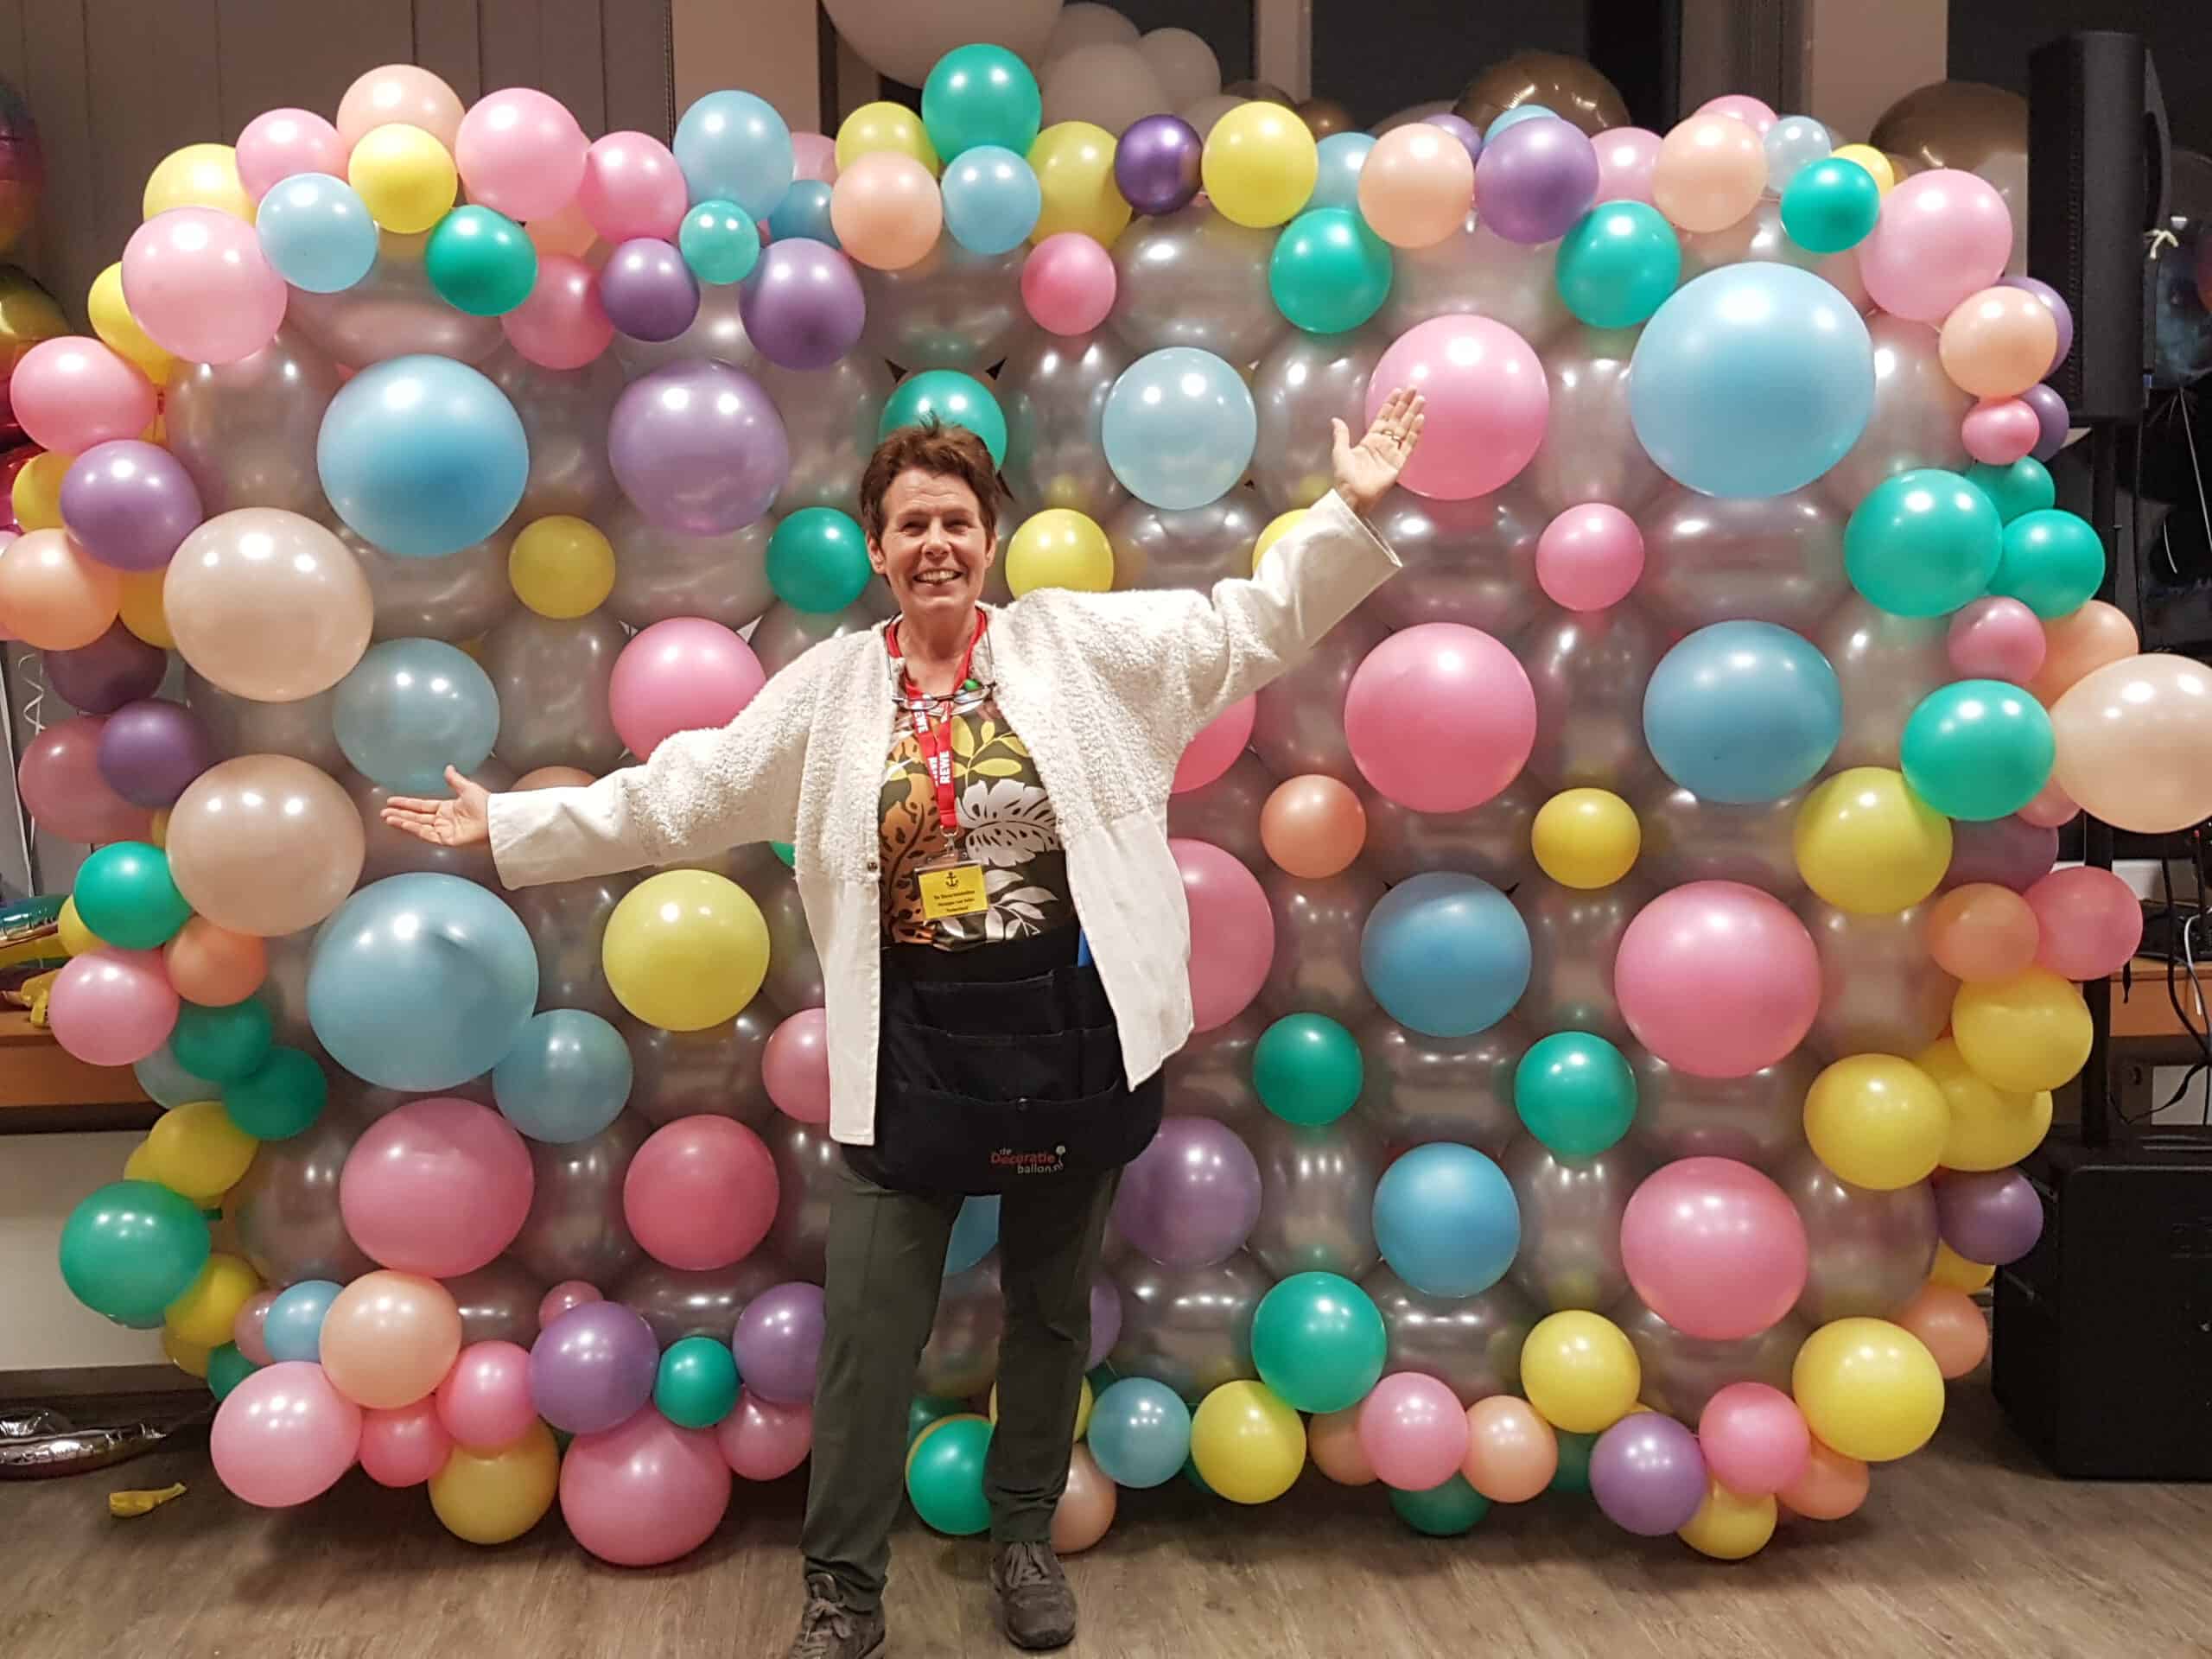 20191106 182819 scaled - Organic ballondecoratie van allerlei maten ballonnen